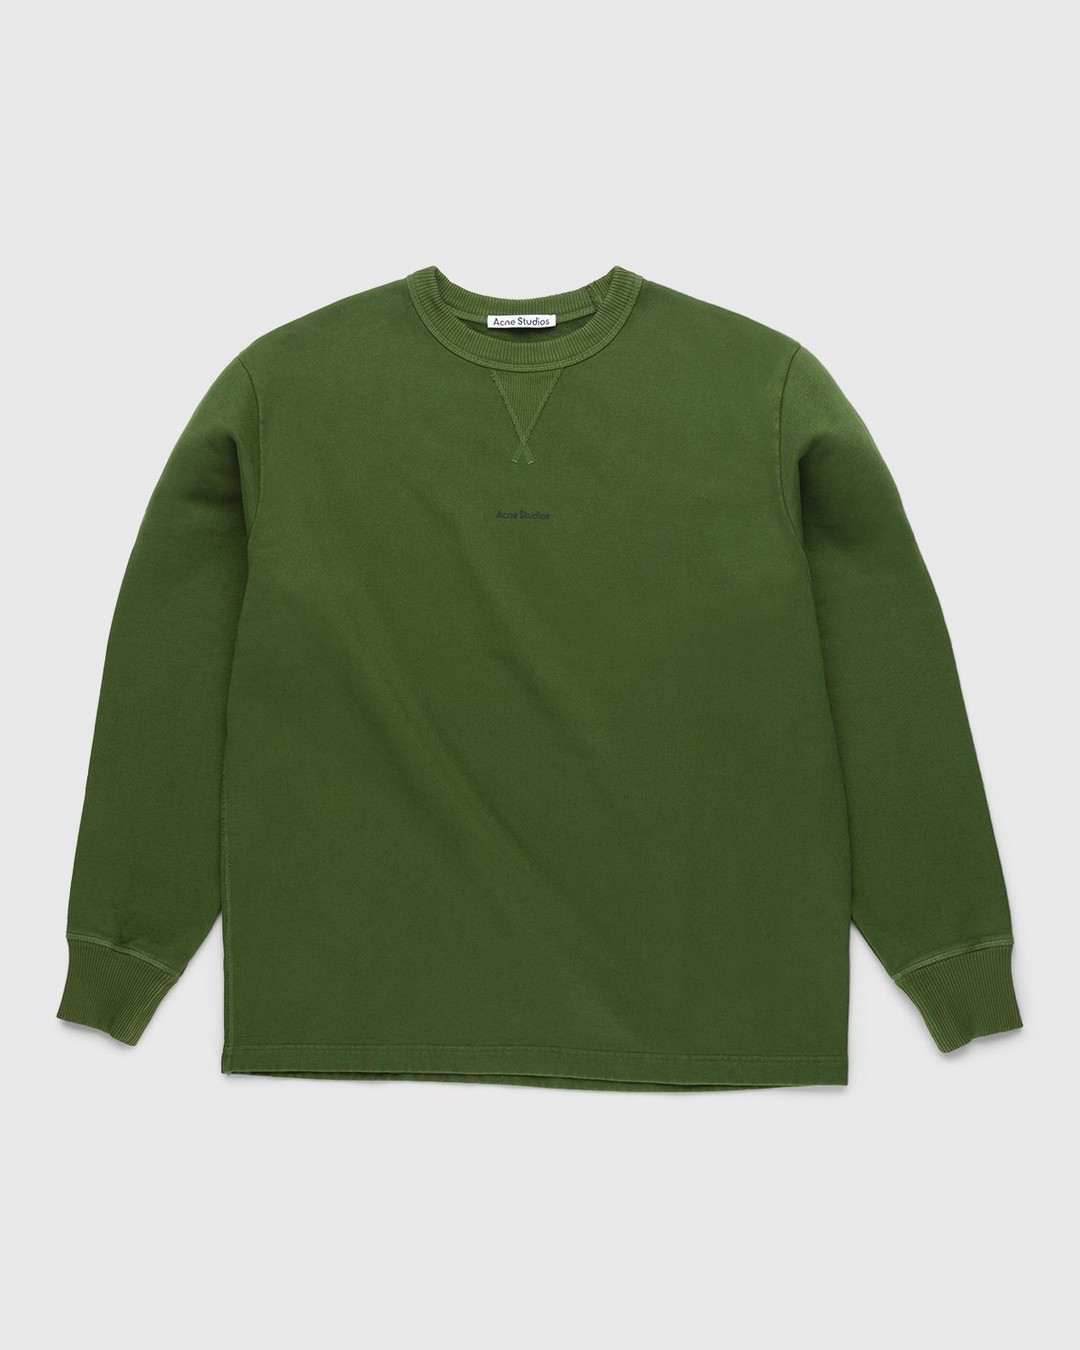 Acne Studios – Organic Cotton Crewneck Sweatshirt Bottle Green - Sweats - Green - Image 1